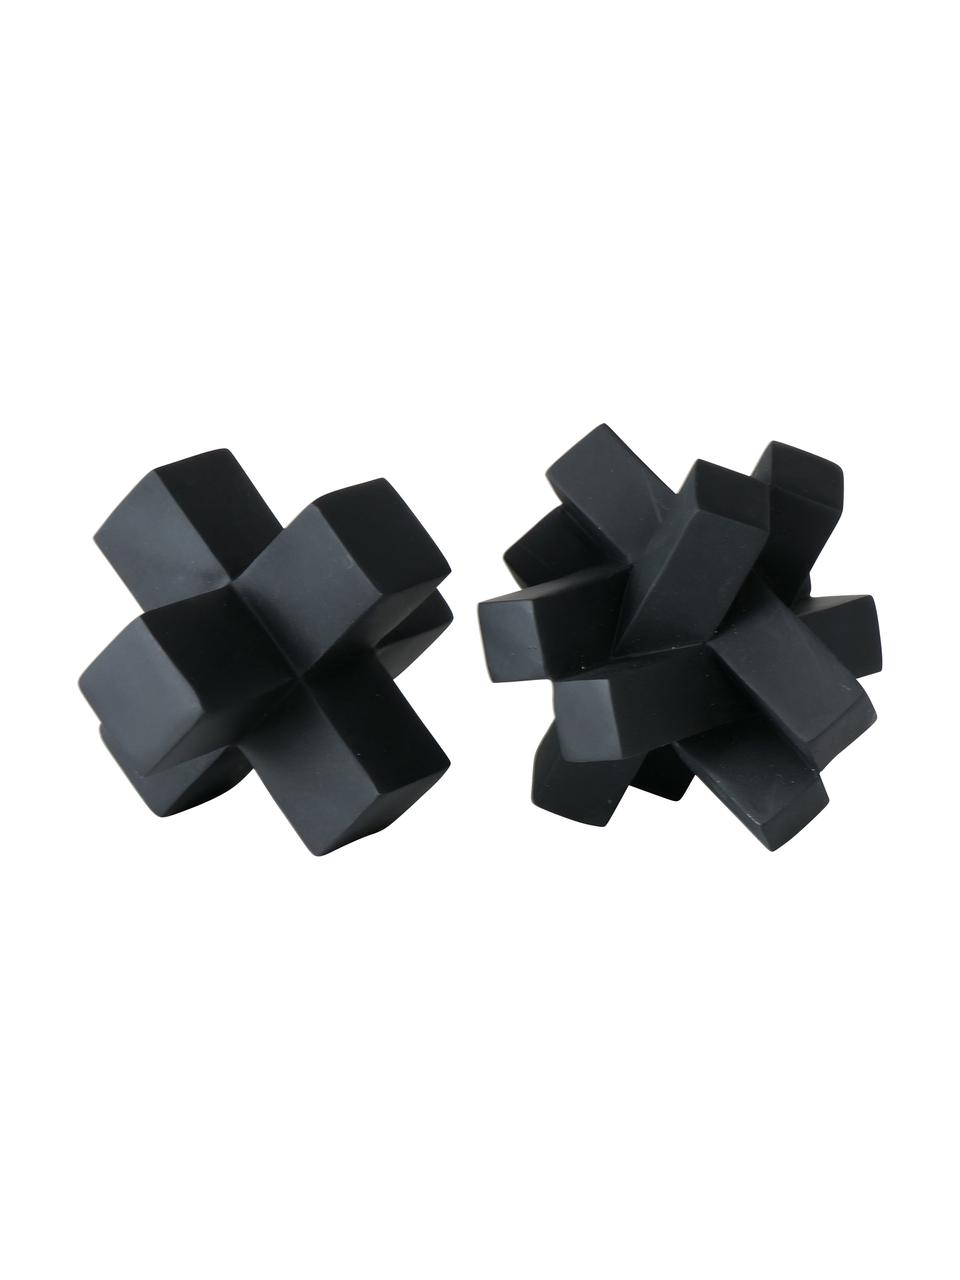 Deko-Objekte-Set Crossy, 2-tlg., Kunststoff, Schwarz, B 10 x H 10 cm